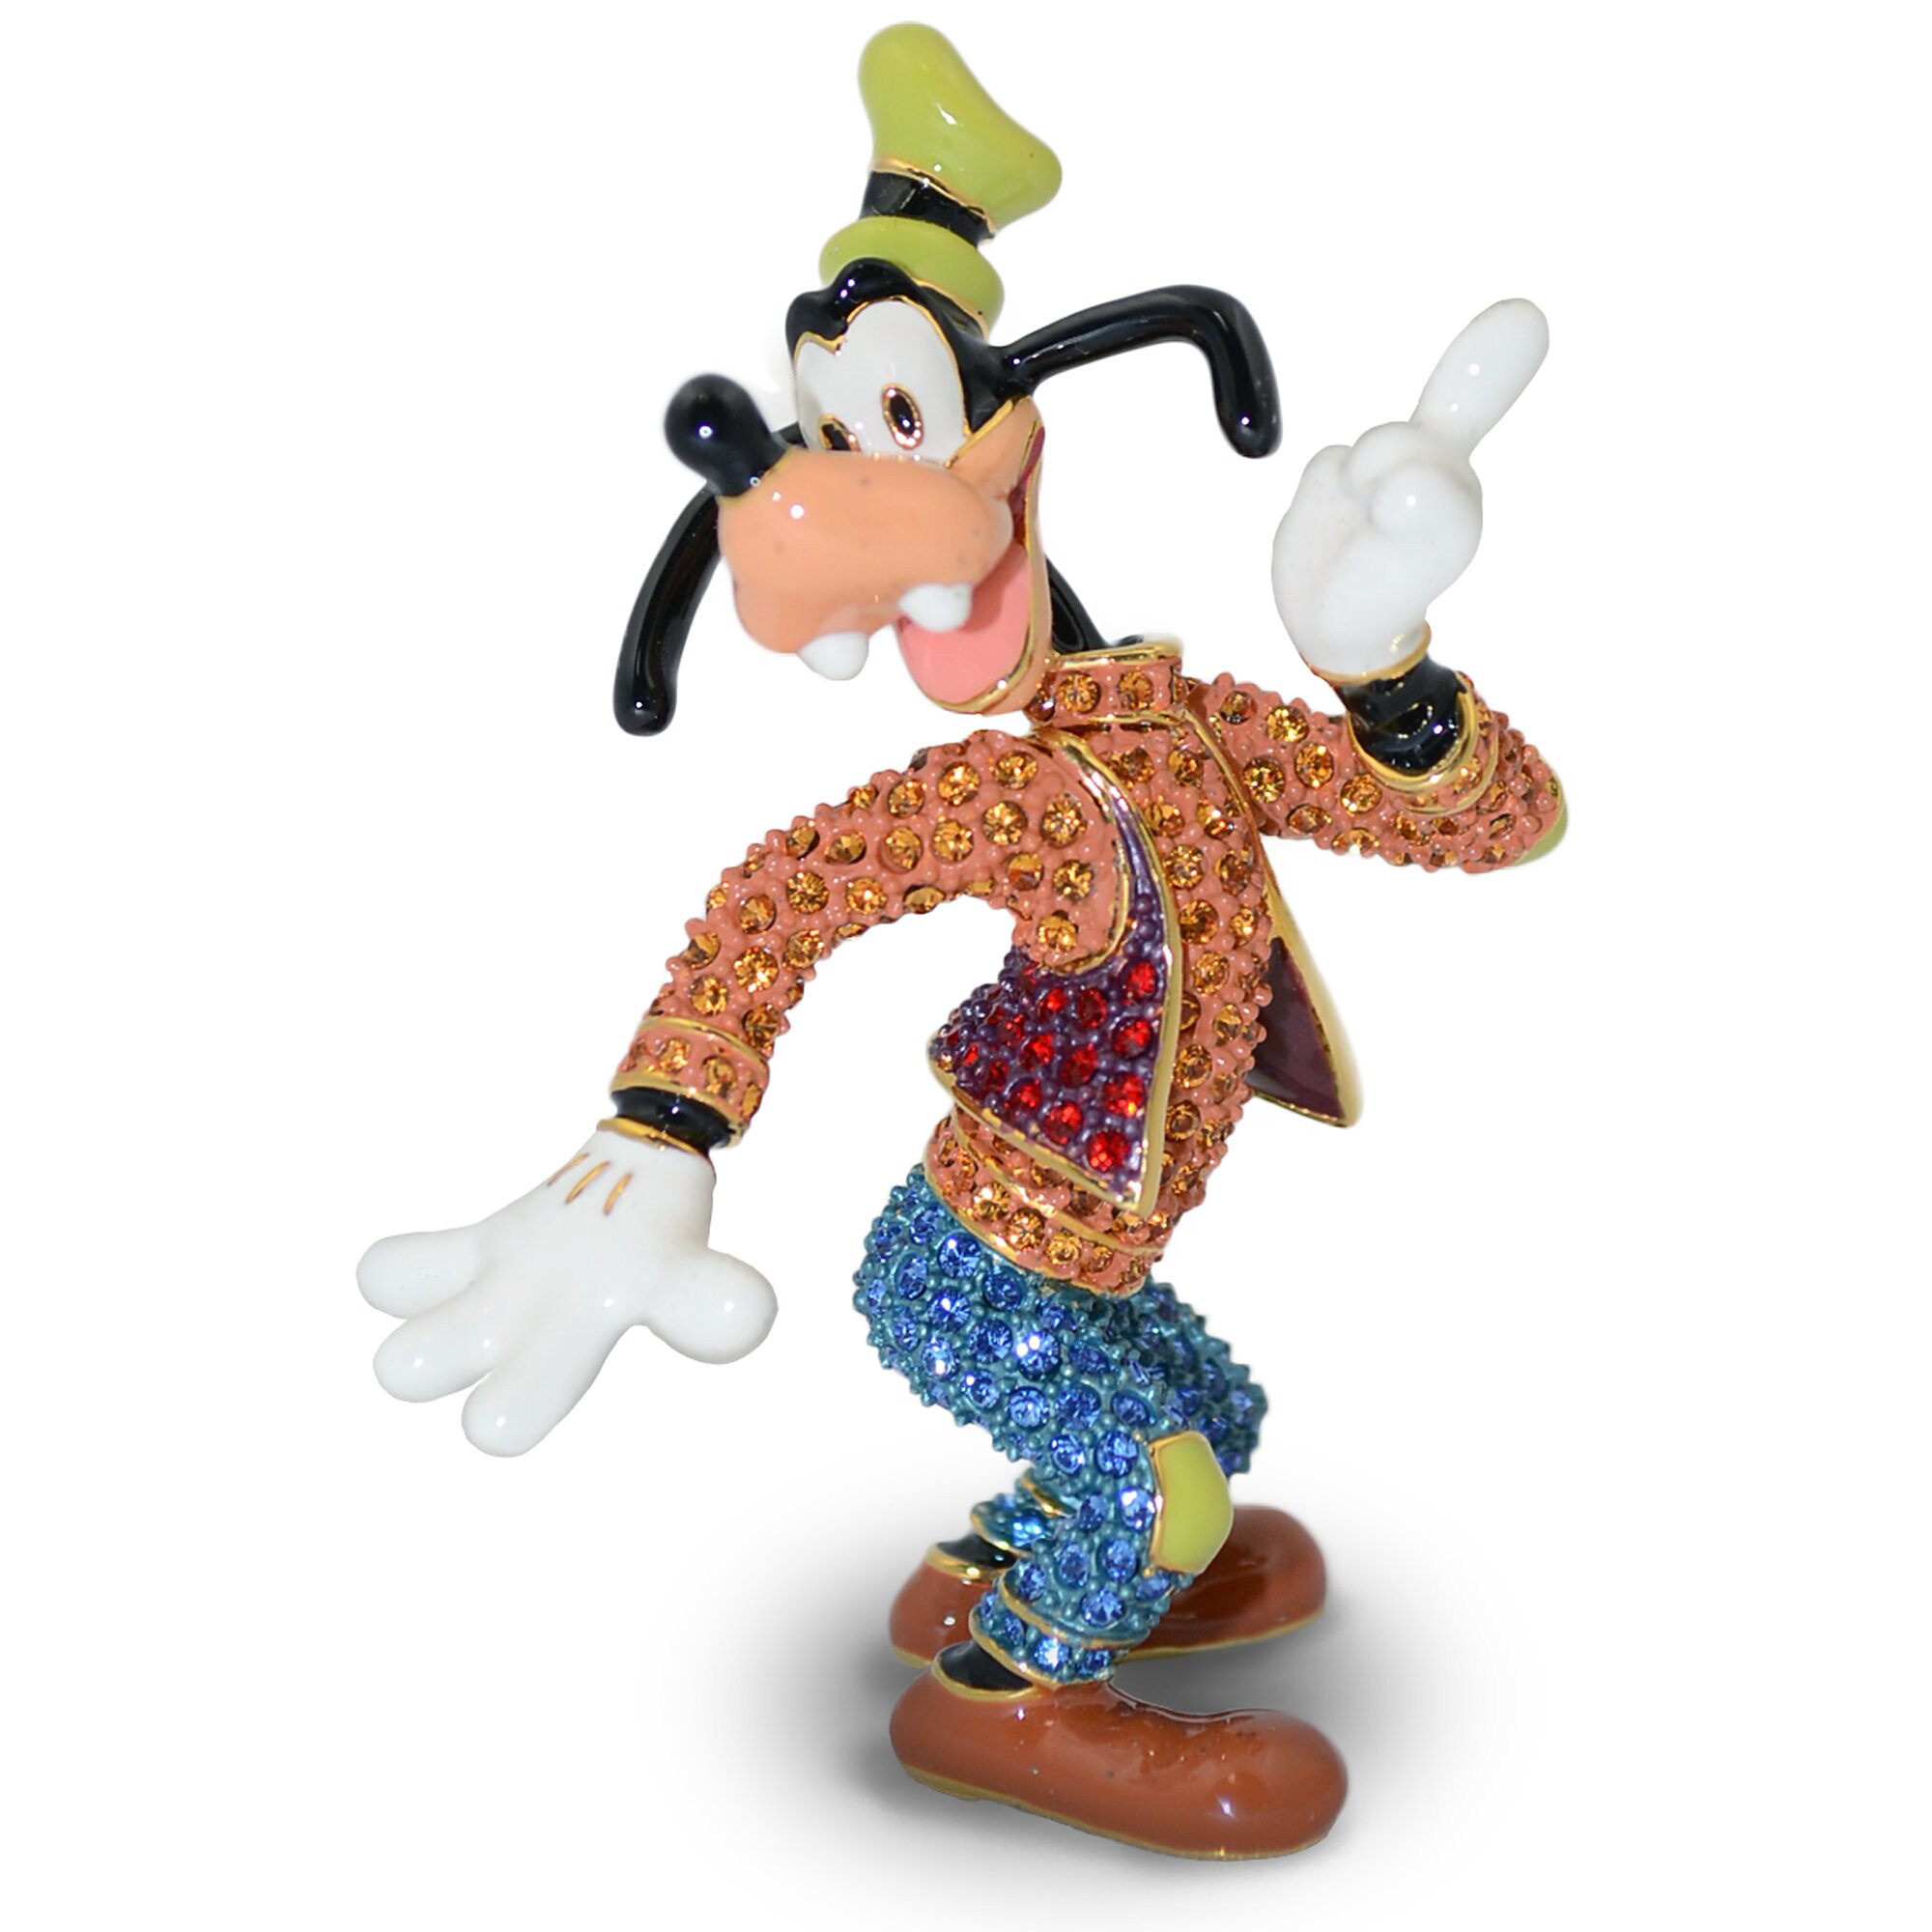 Goofy Figurine by Arribas - Jeweled - Limited Edition